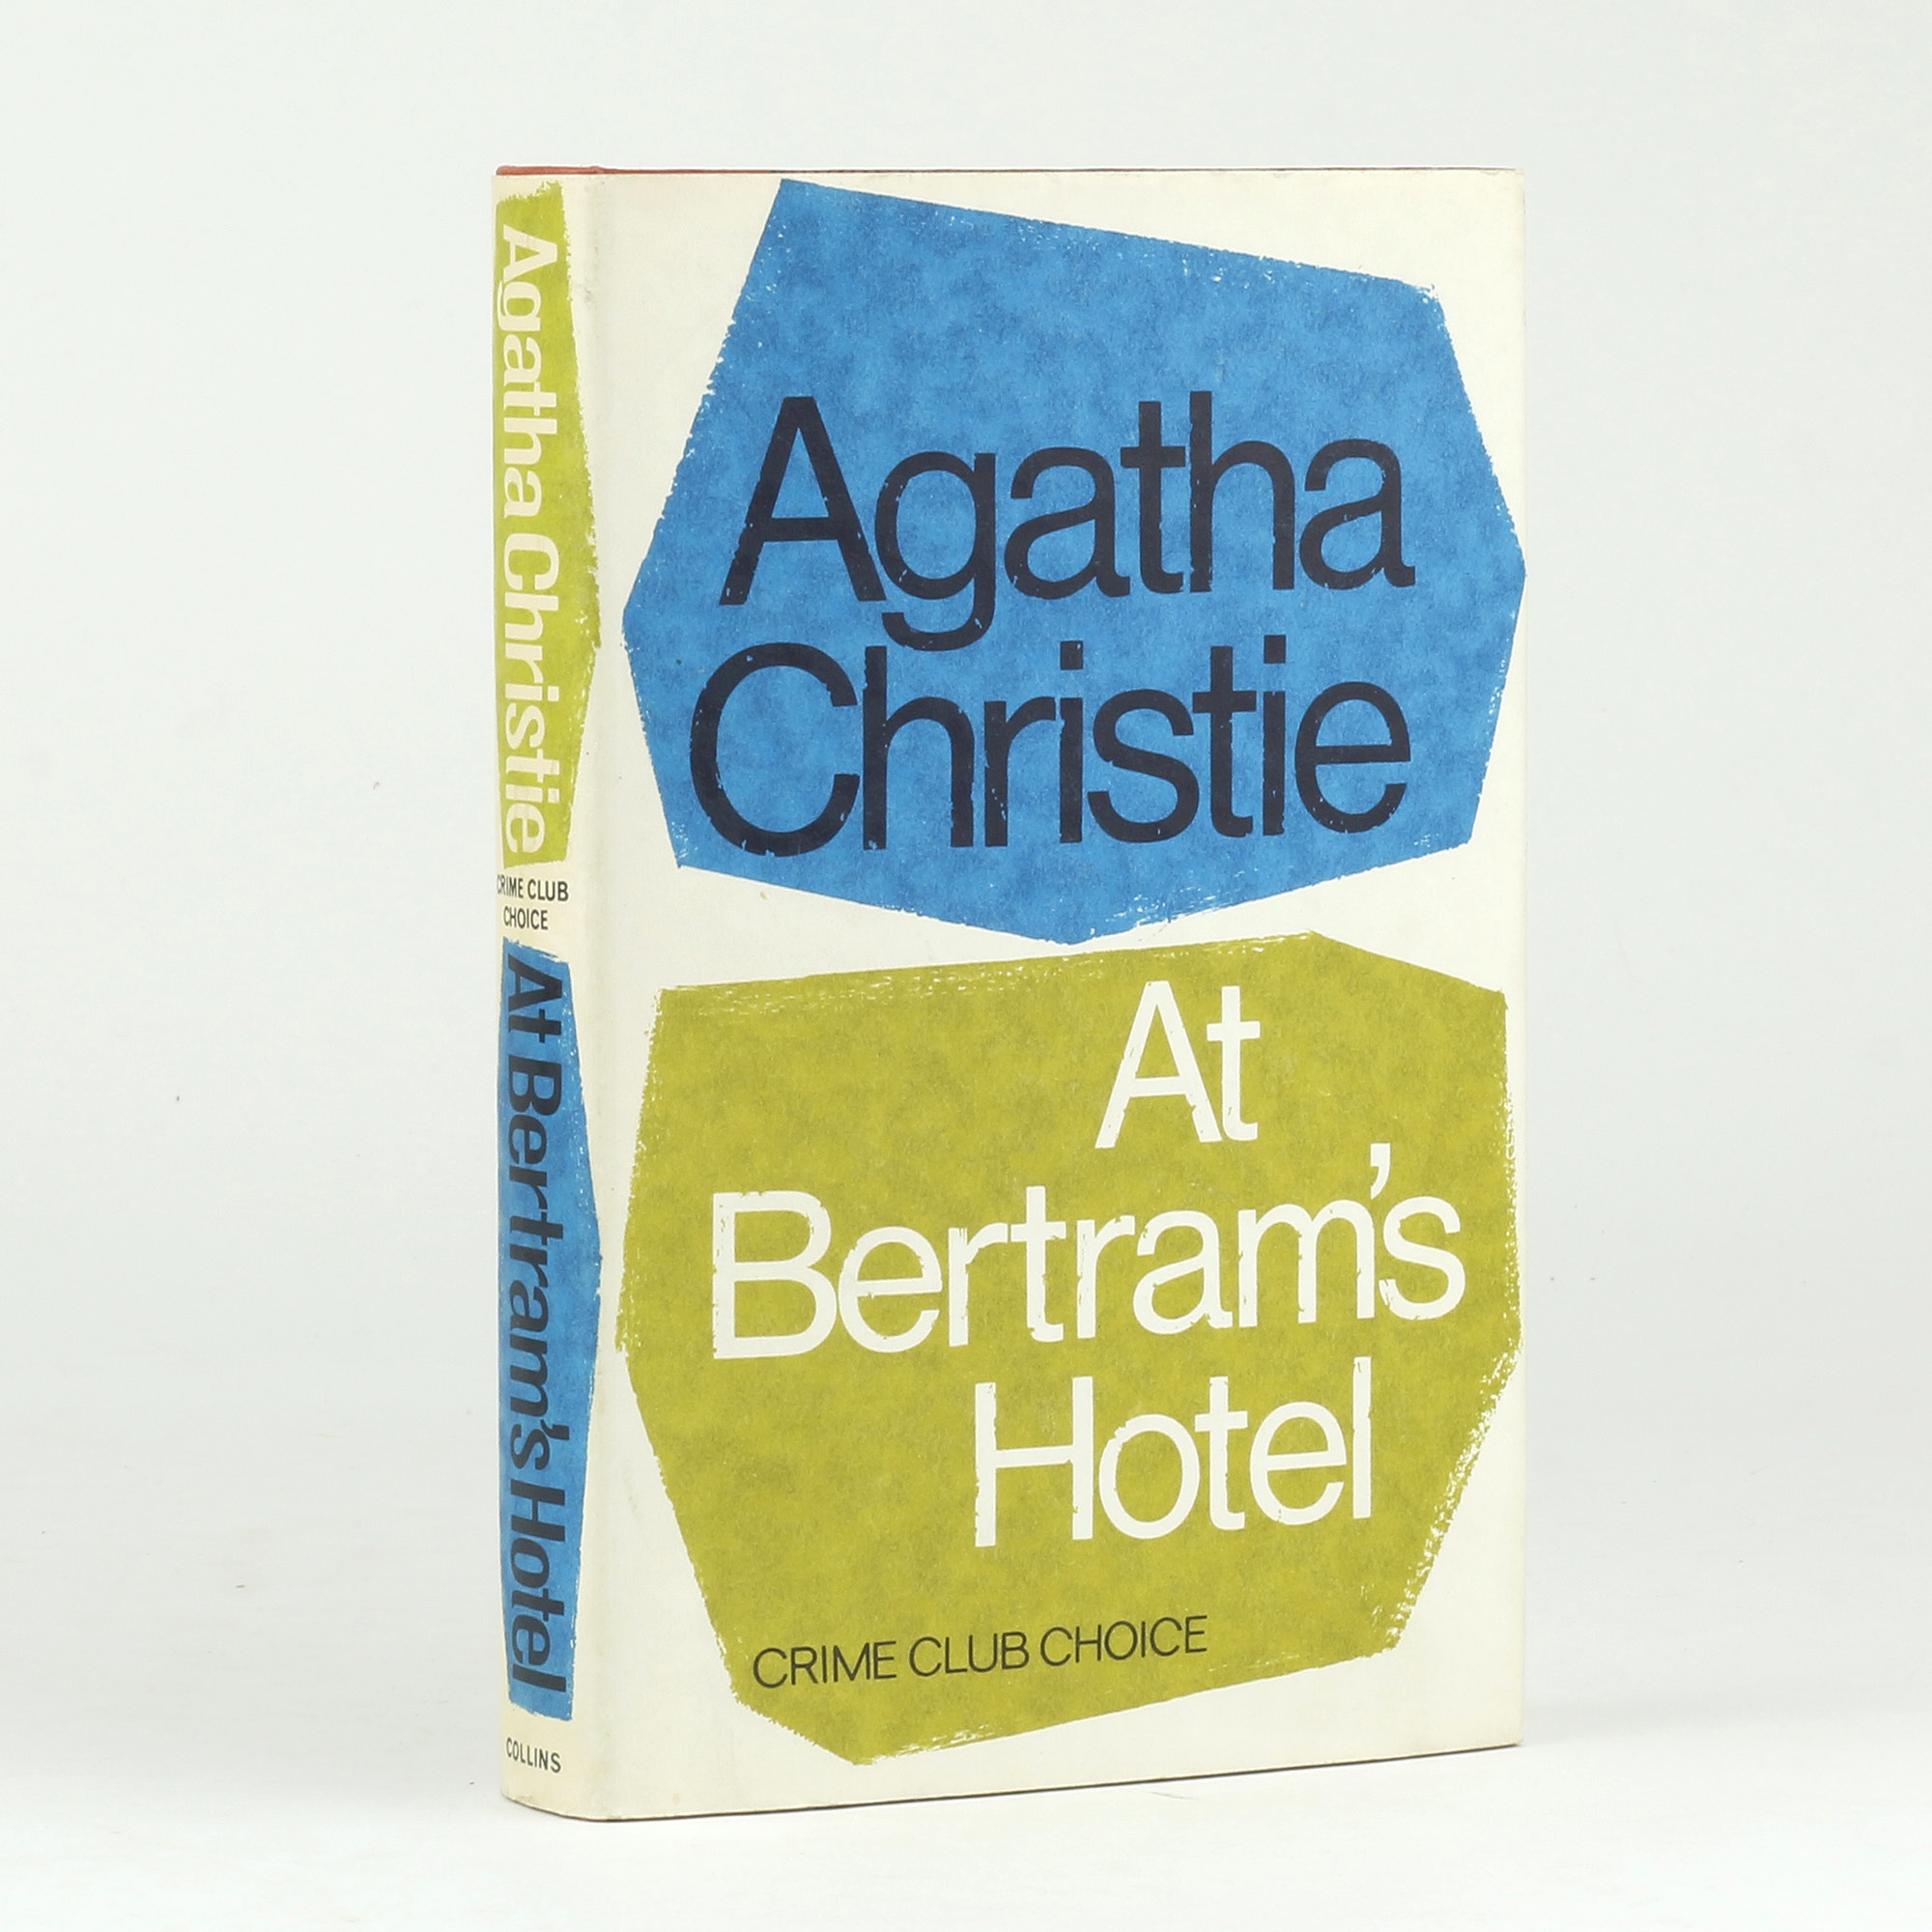 In hotel Bertram by Agatha Christie